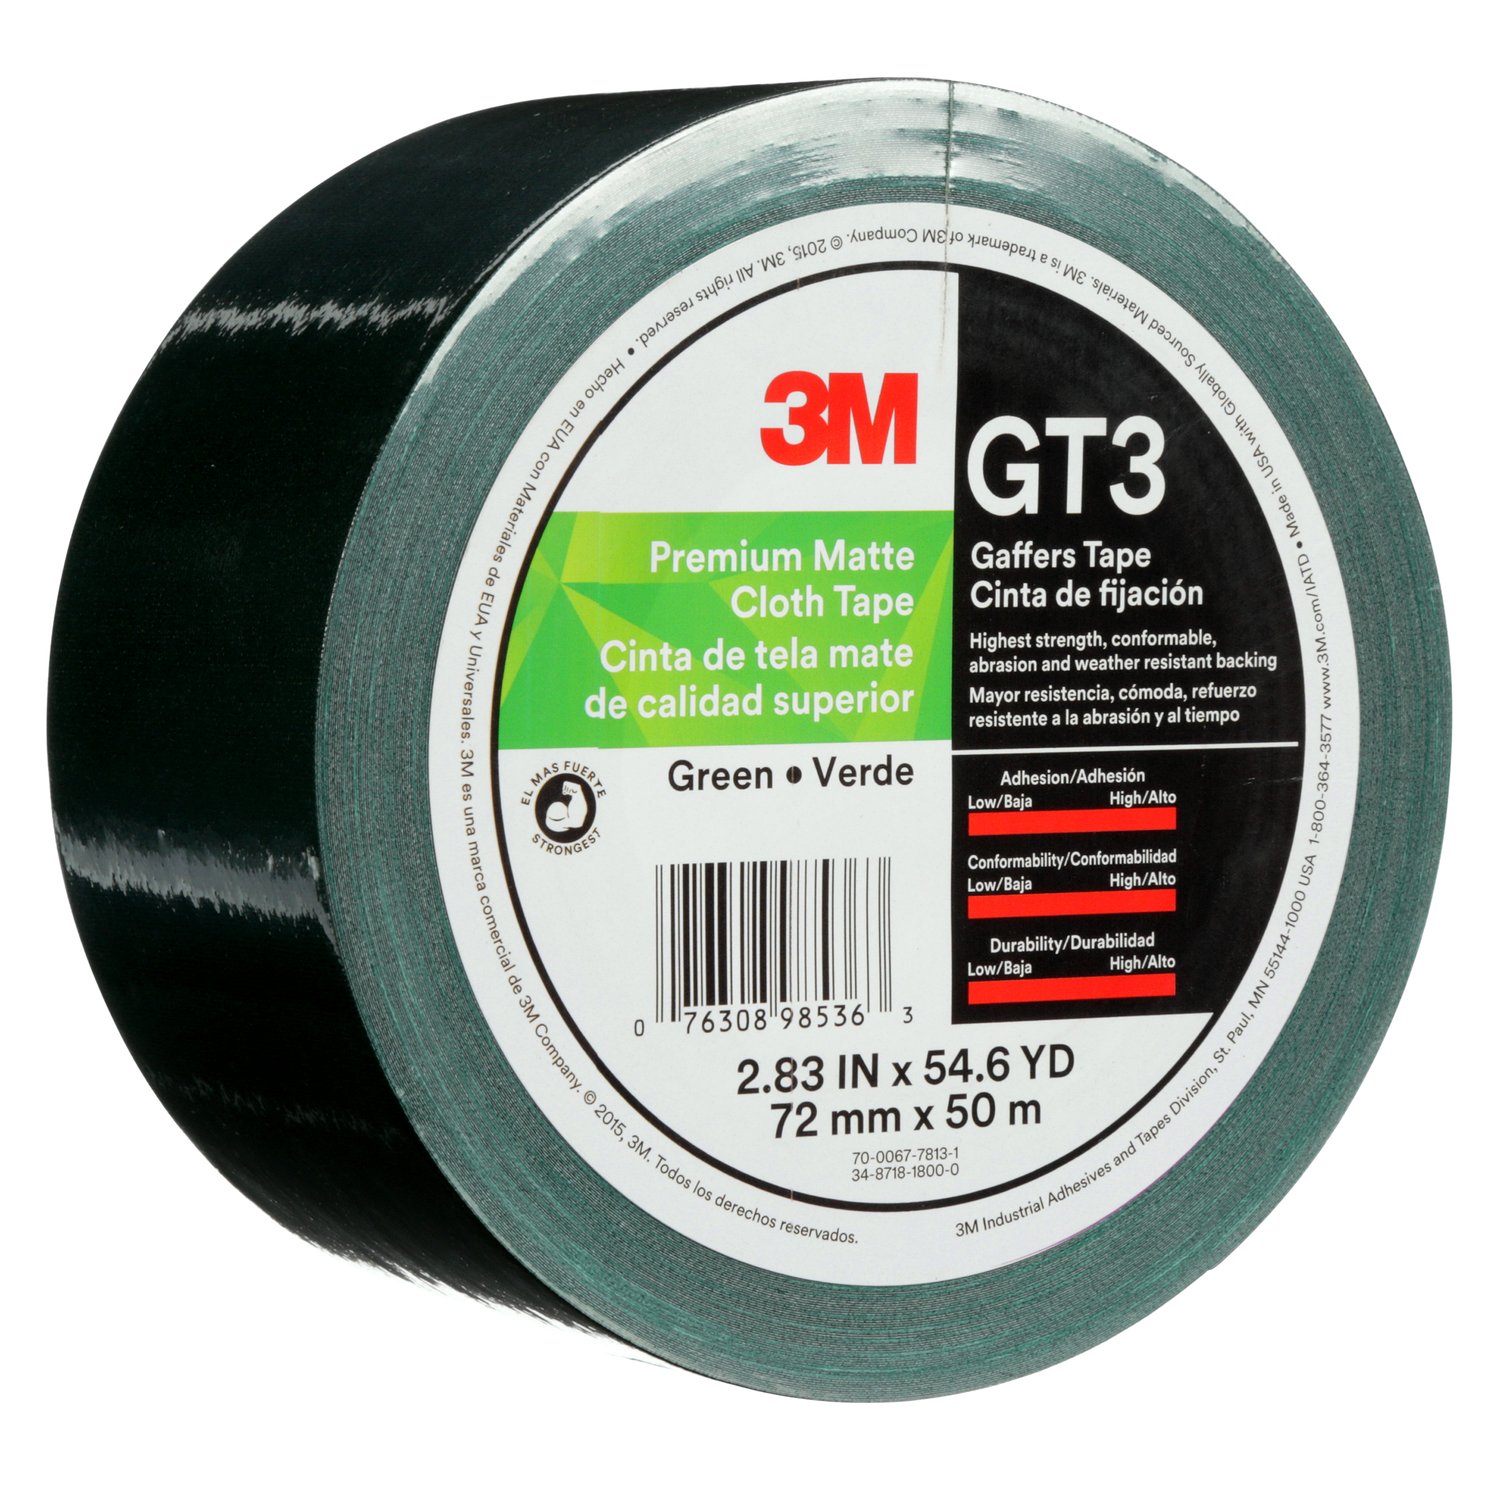 7010336138 - 3M Premium Matte Cloth (Gaffers) Tape GT3, Green, 72 mm x 50 m, 11 mil,
16/Case